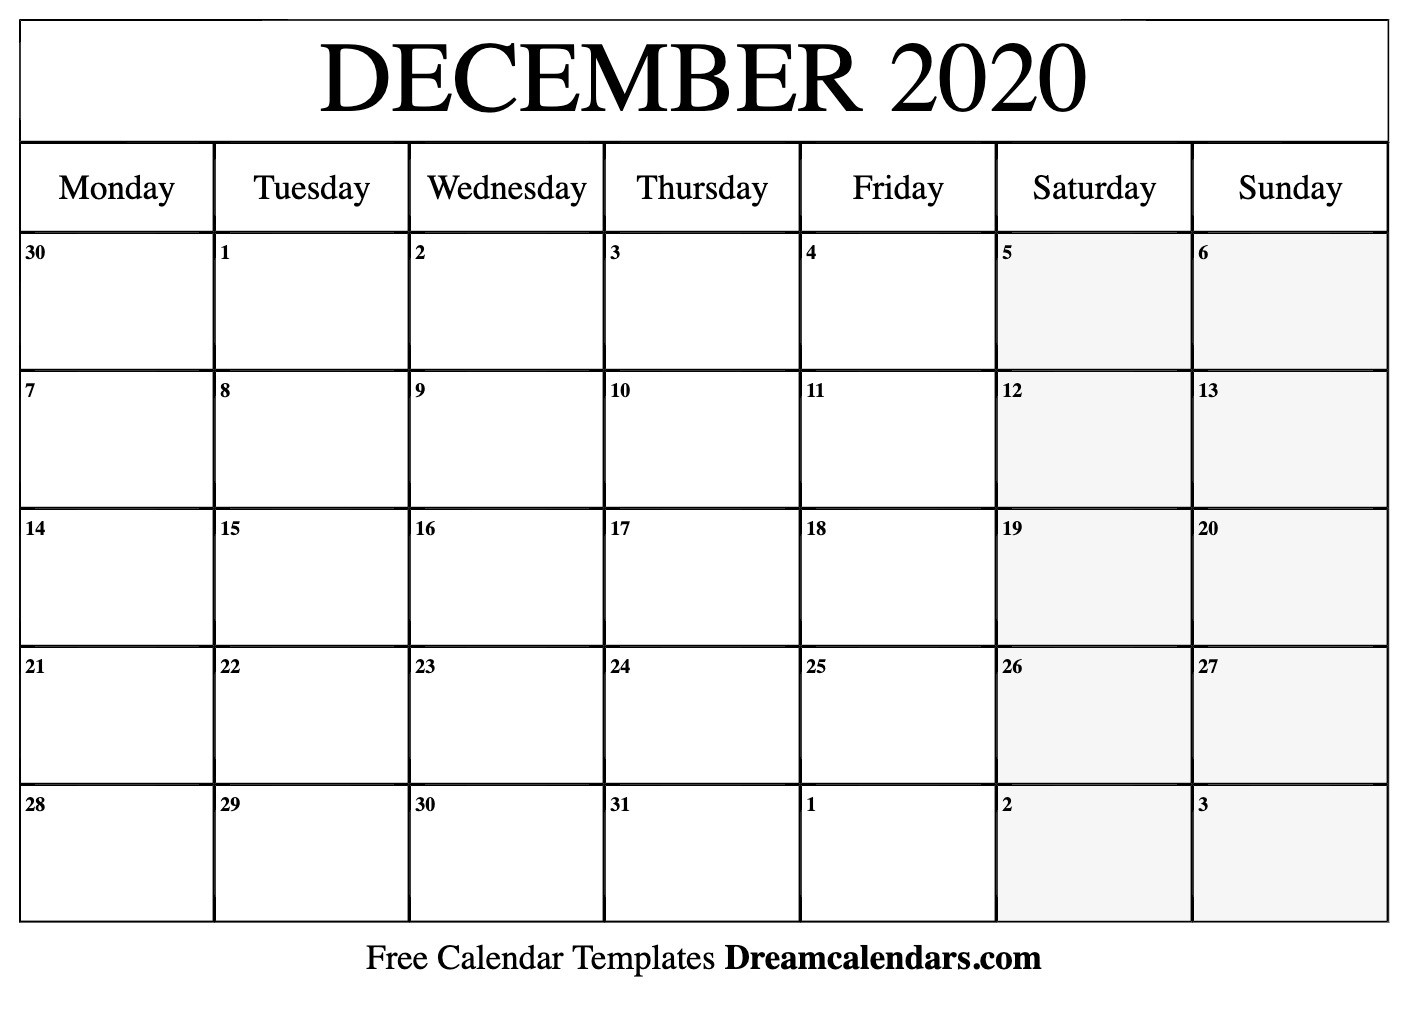 Printable December 2020 Calendar Templates - Helena Orstem